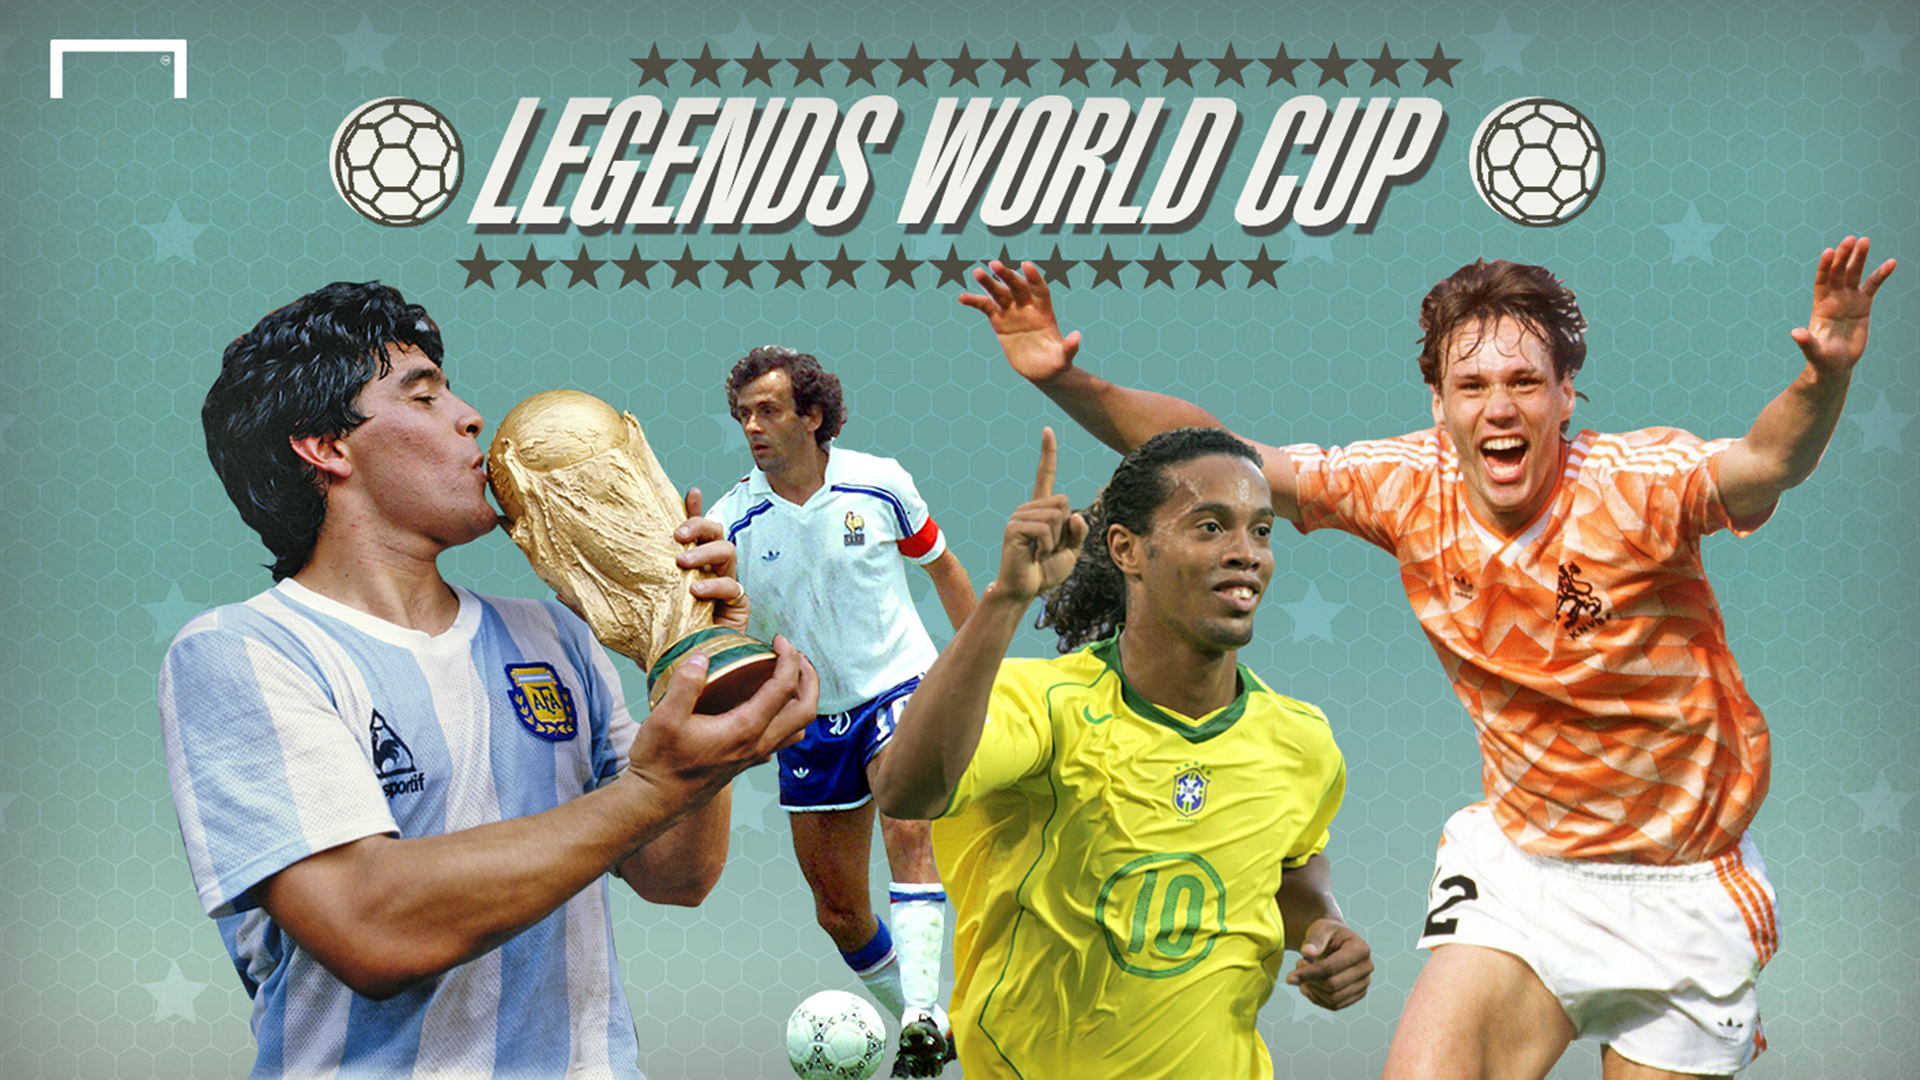 Legends World Cup